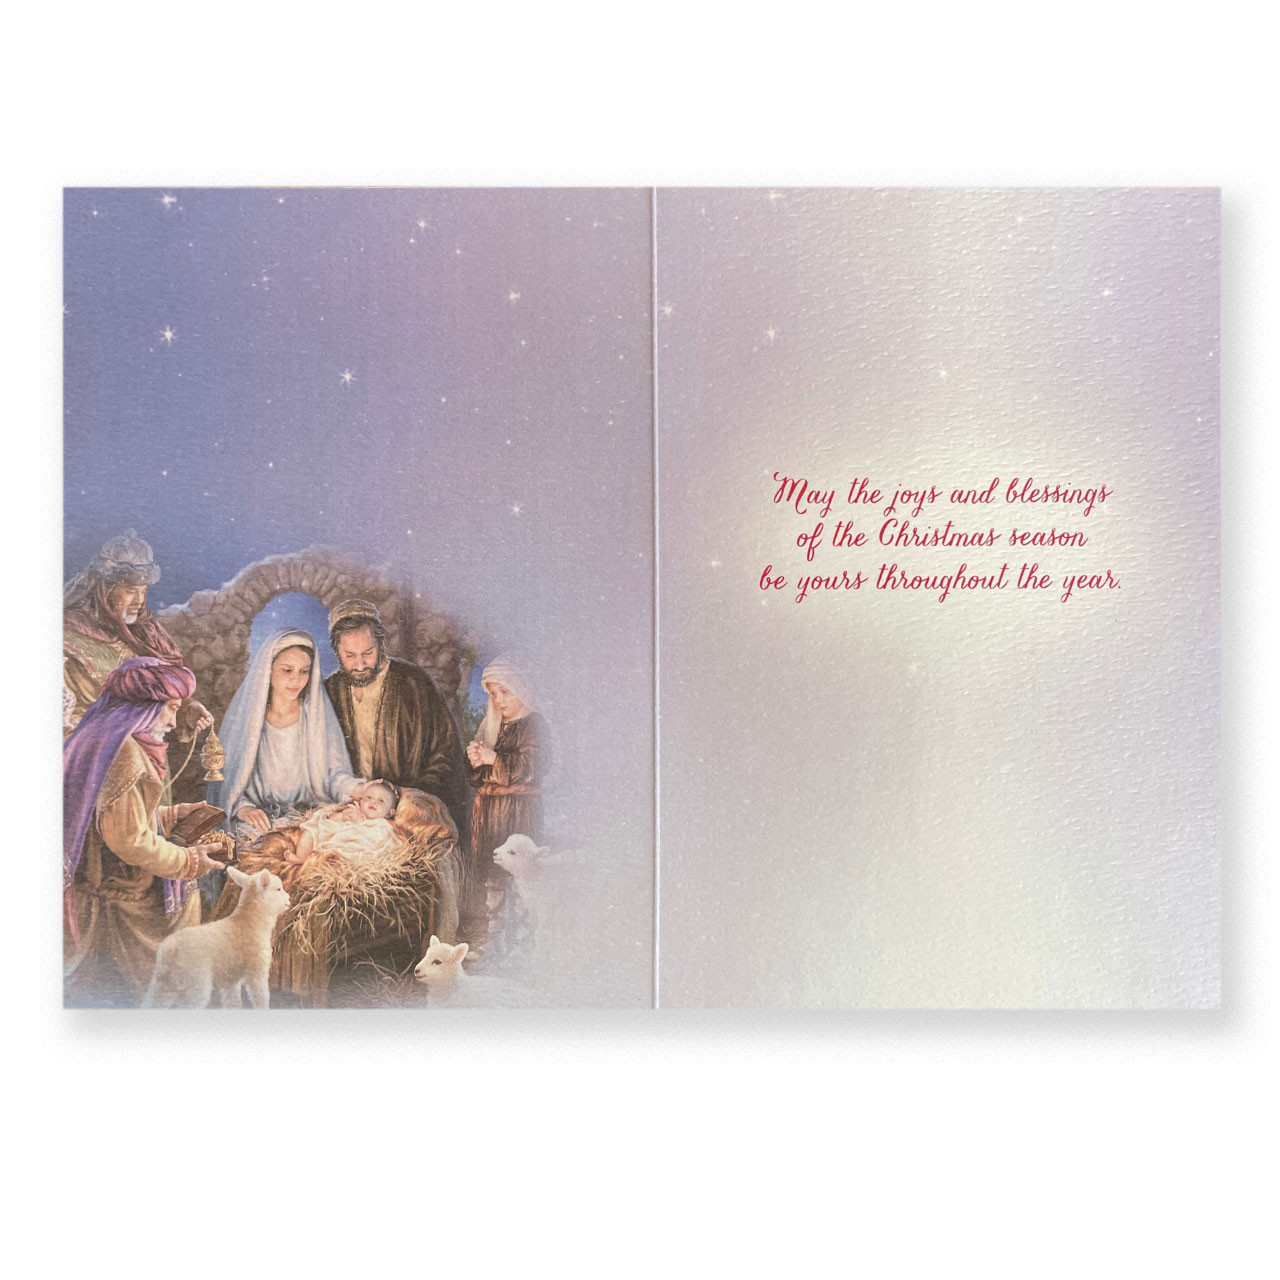 Inside the Christmas Blessings Card